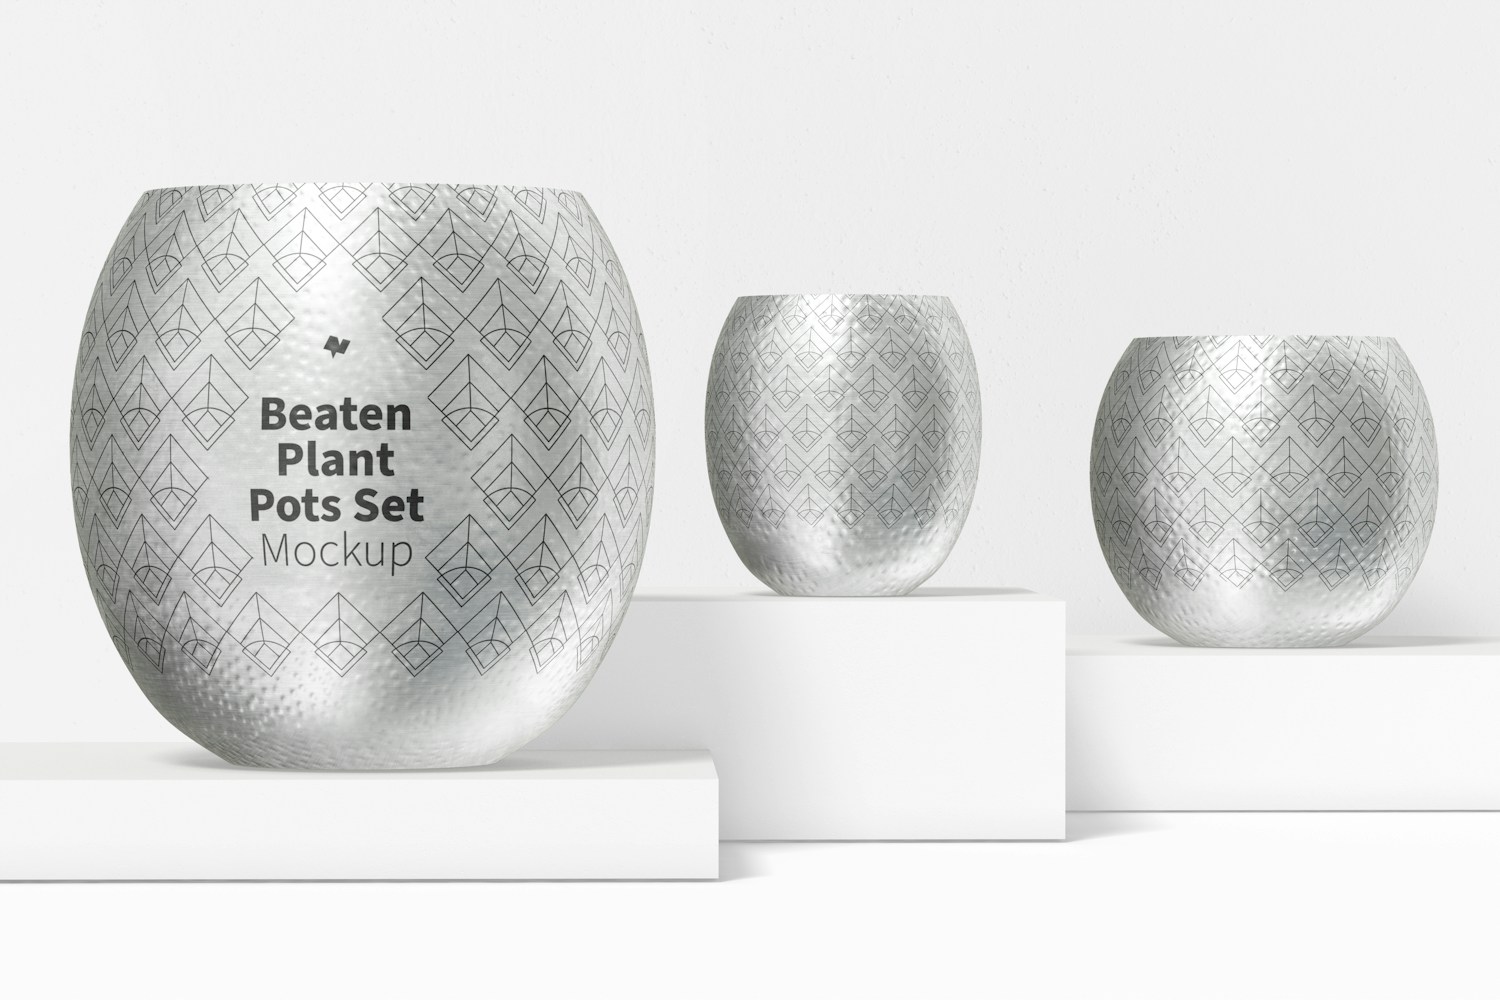 Beaten Plant Pots Set Mockup, Perspective